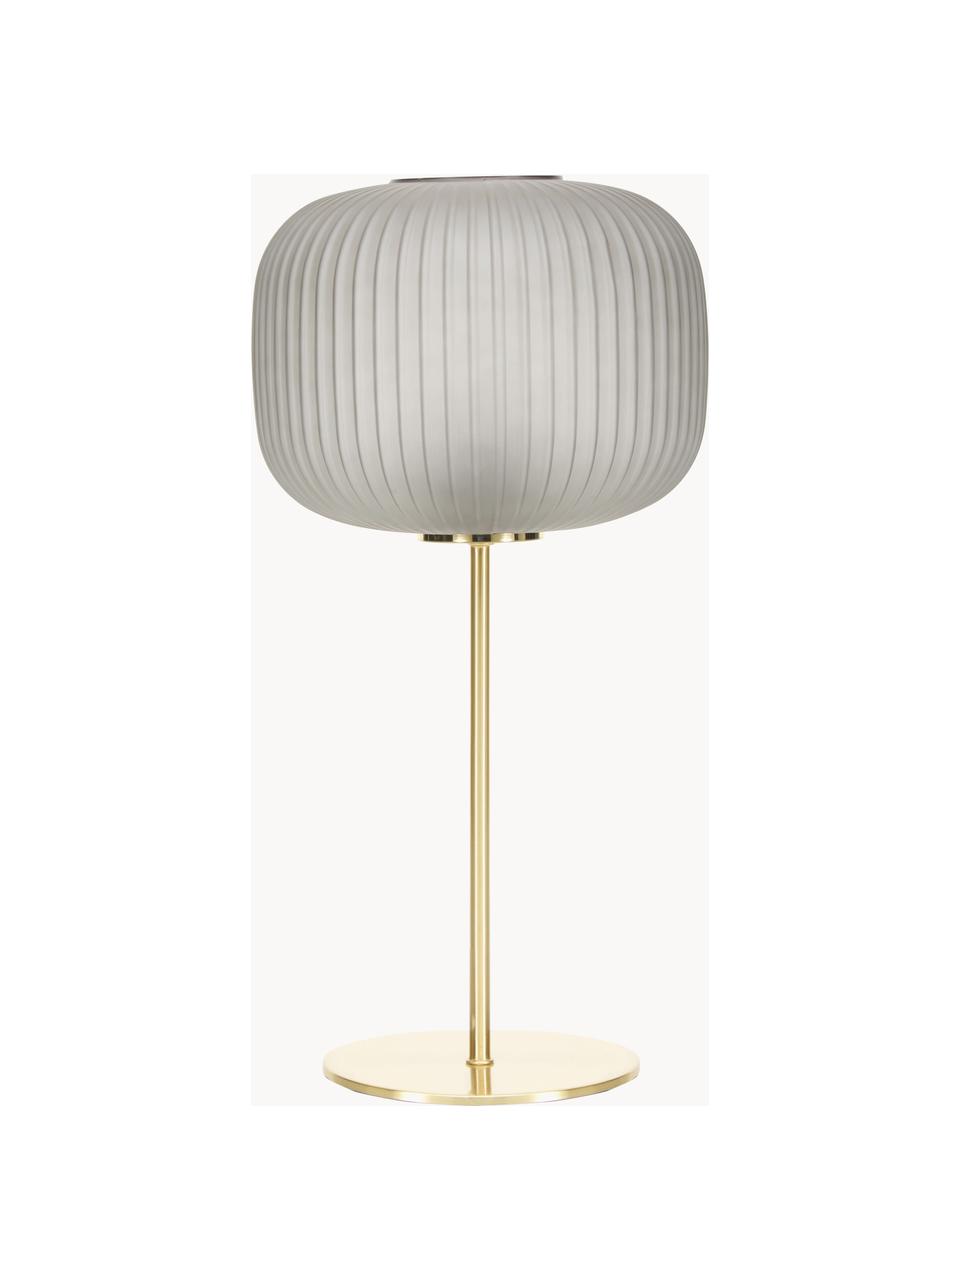 Grote tafellamp Sober met glazen lampenkap, Lampenkap: glas, Lampvoet: geborsteld metaal, Goudkleurig, grijs, Ø 25 x H 50 cm